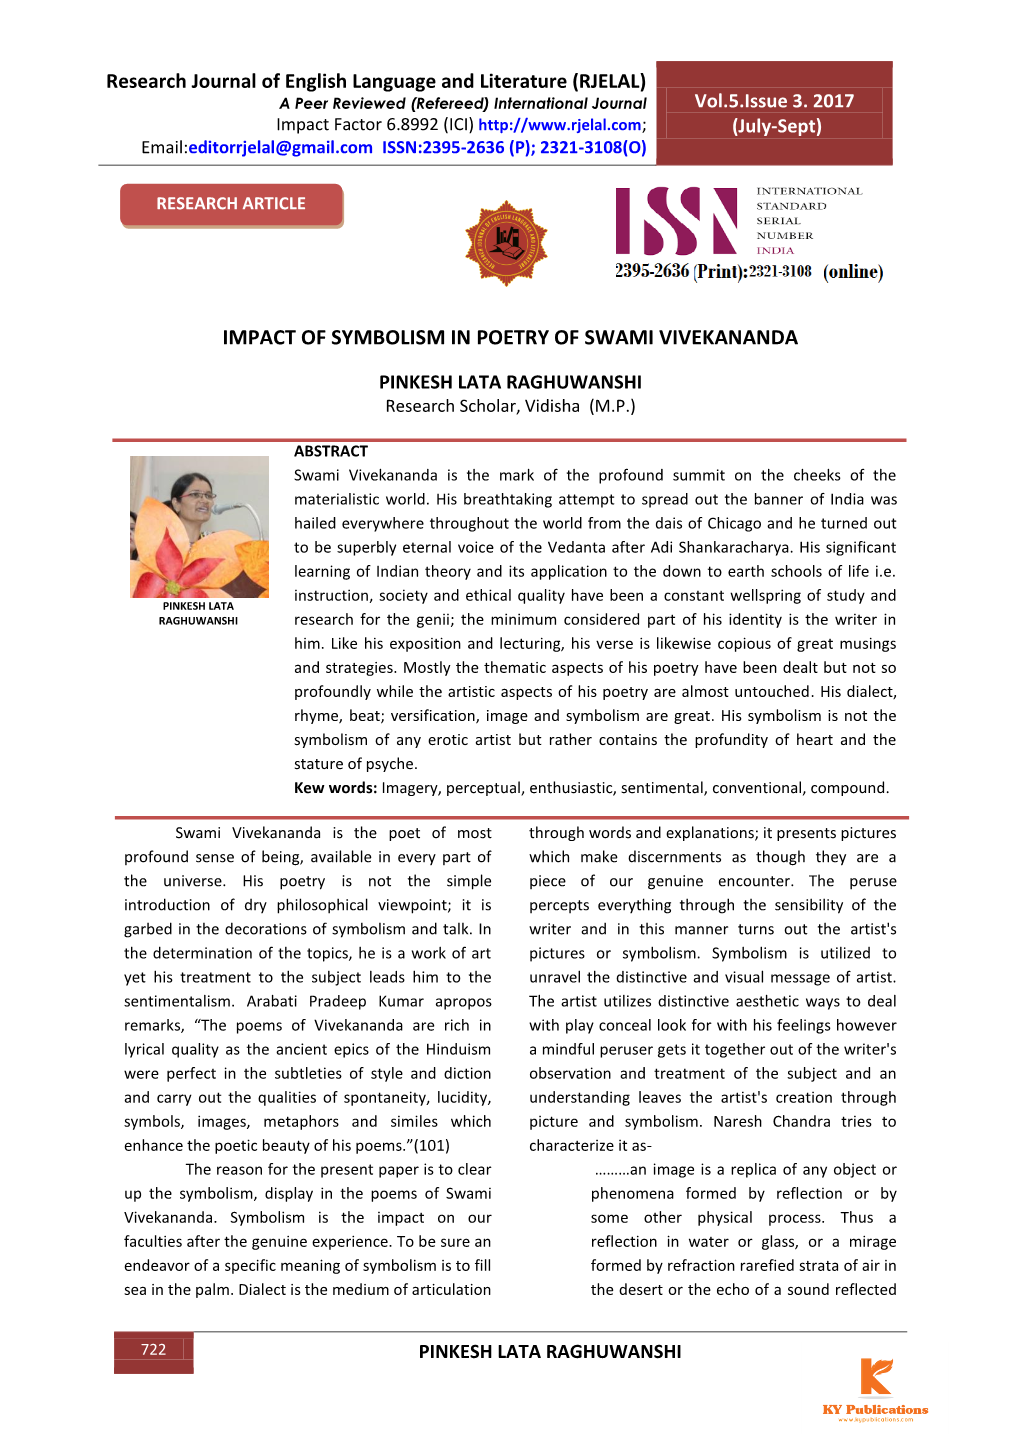 Impact of Symbolism in Poetry of Swami Vivekananda